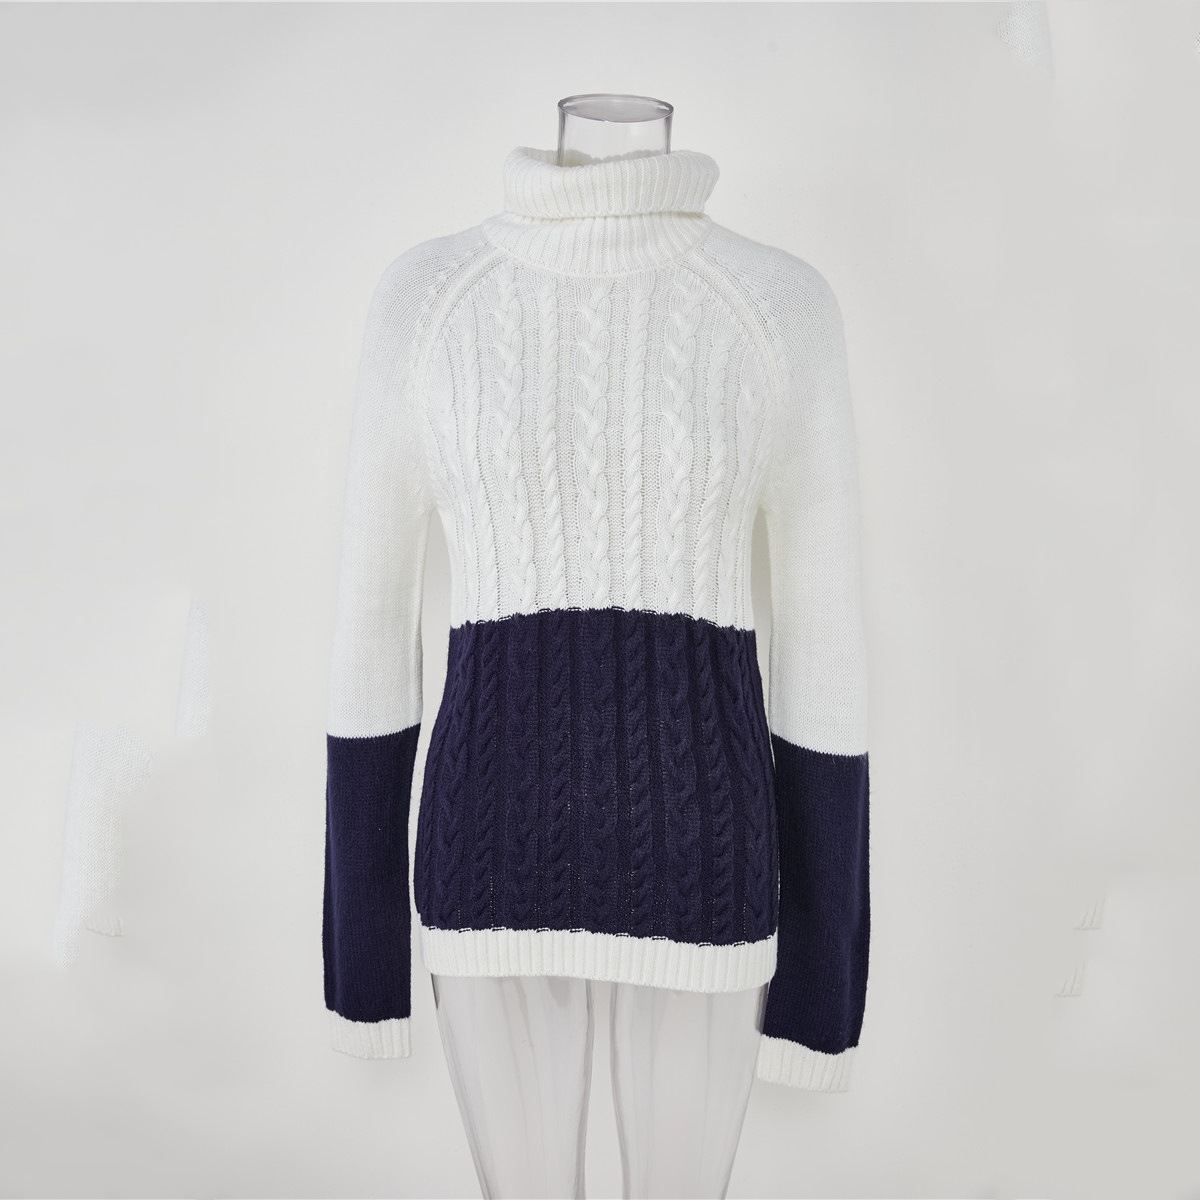 2022 Winter Casual Long Sleeve Knitted New Korean Style Knitwear Sweaters Women Tops (1)